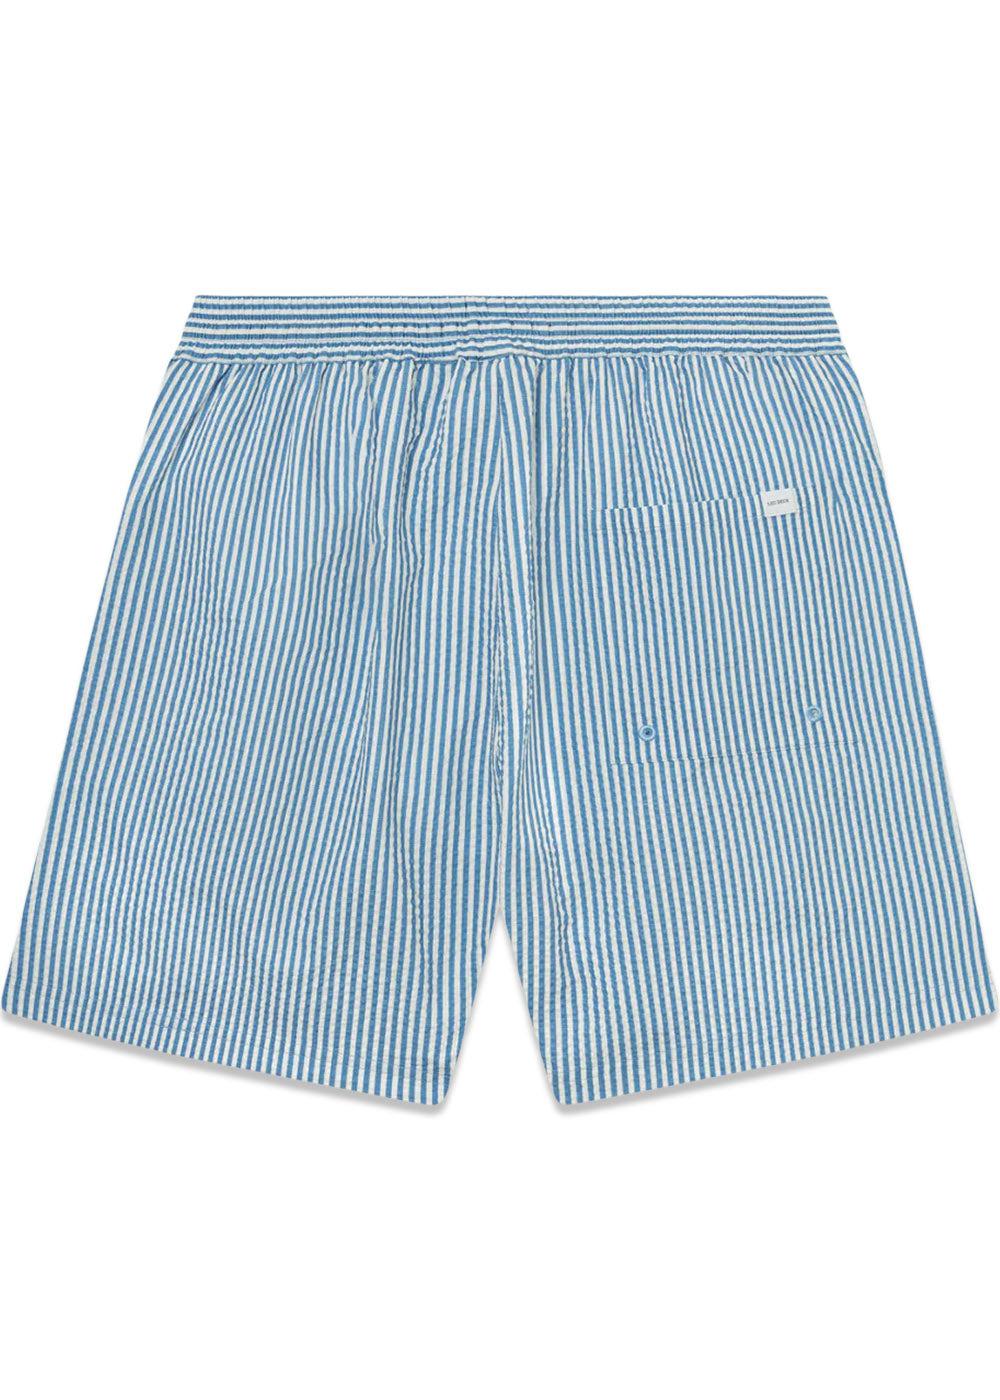 Stan Stripe Seersucker Swim Shorts - Washed Denim Blue/Light Ivory